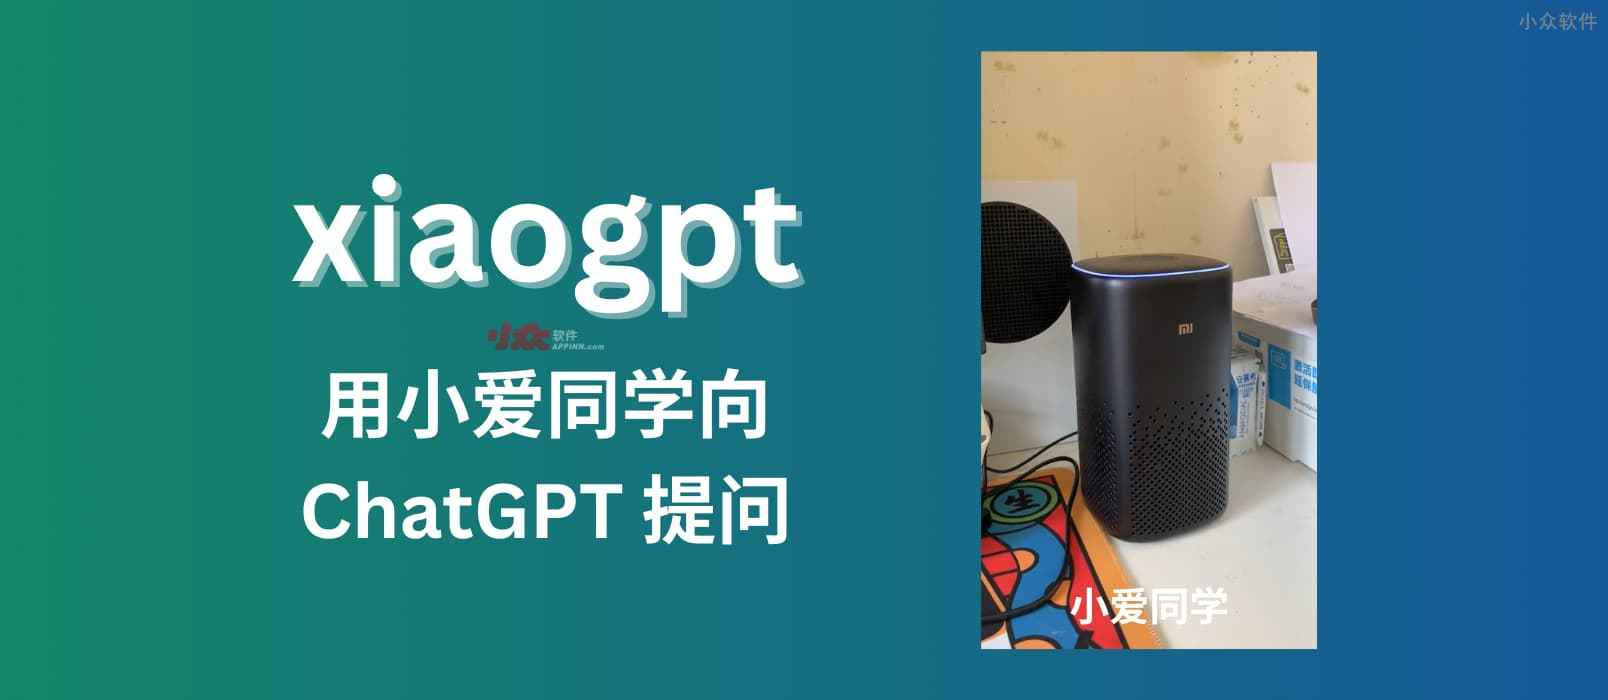 xiaogpt – 用小爱同学向 ChatGPT 提问